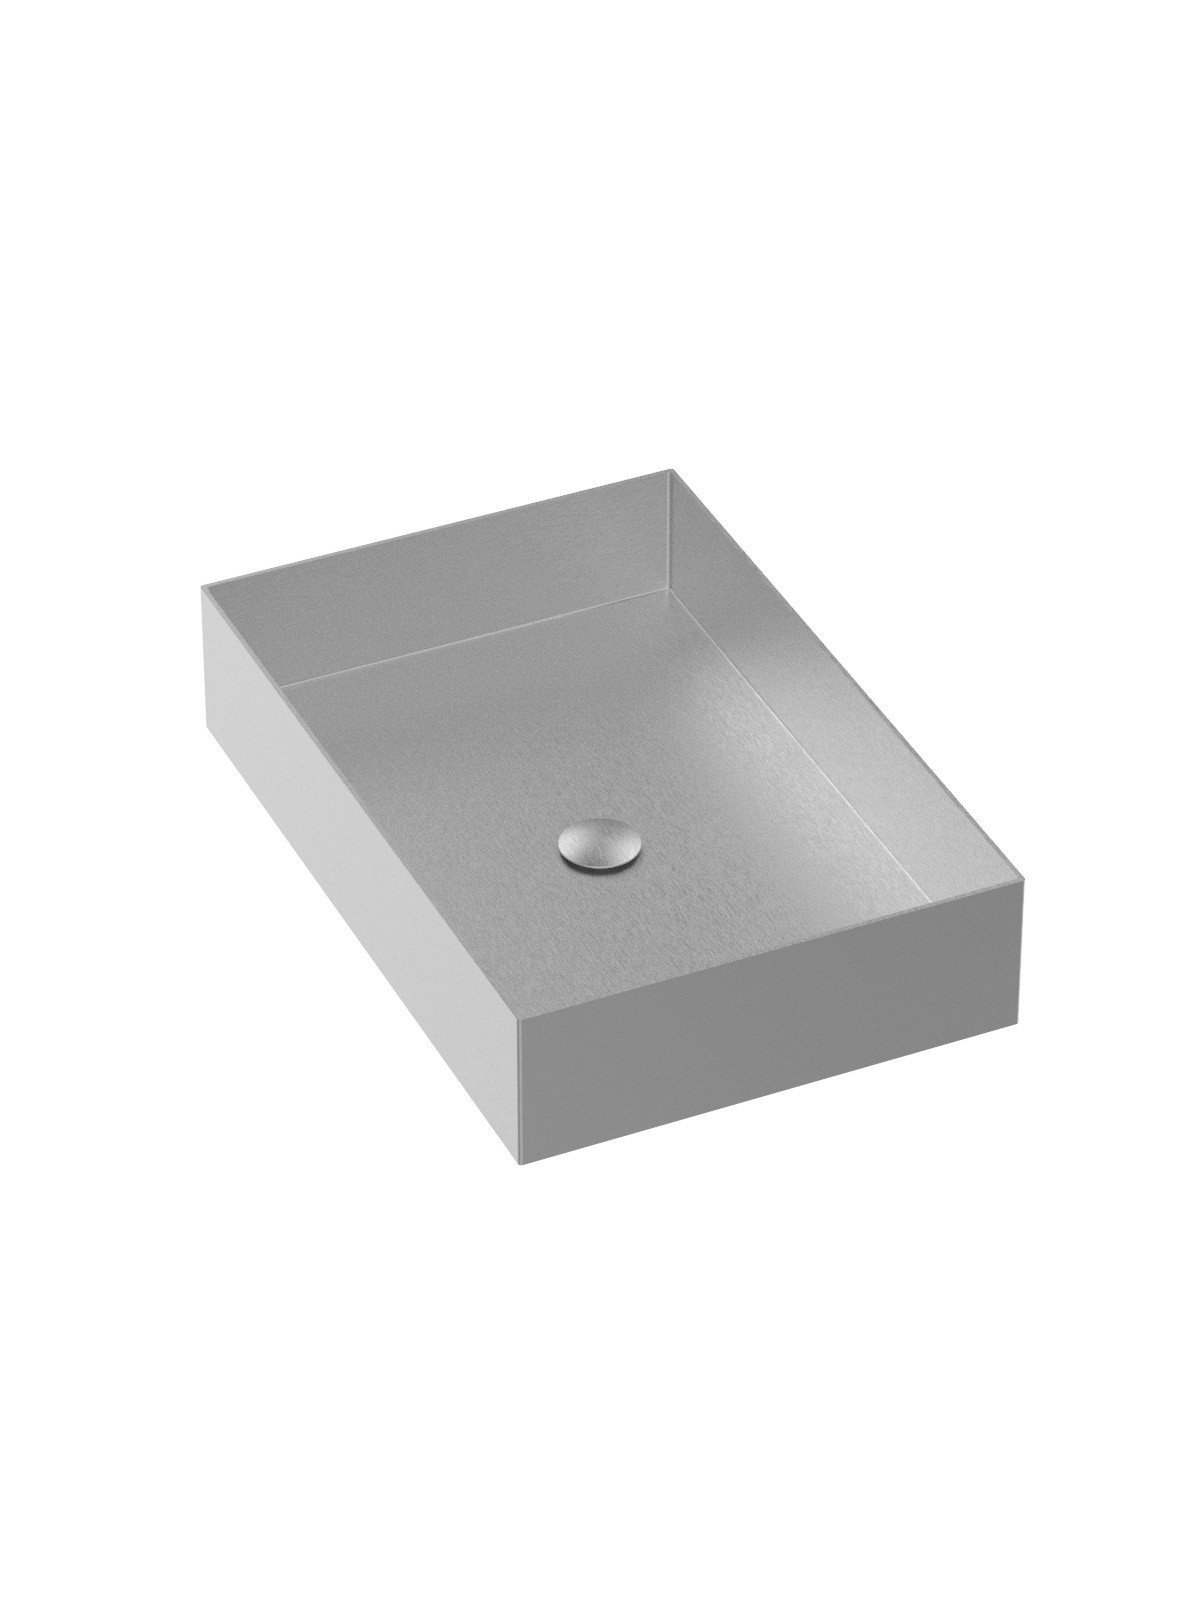 400x600 mm Countertop basin with universal push drain